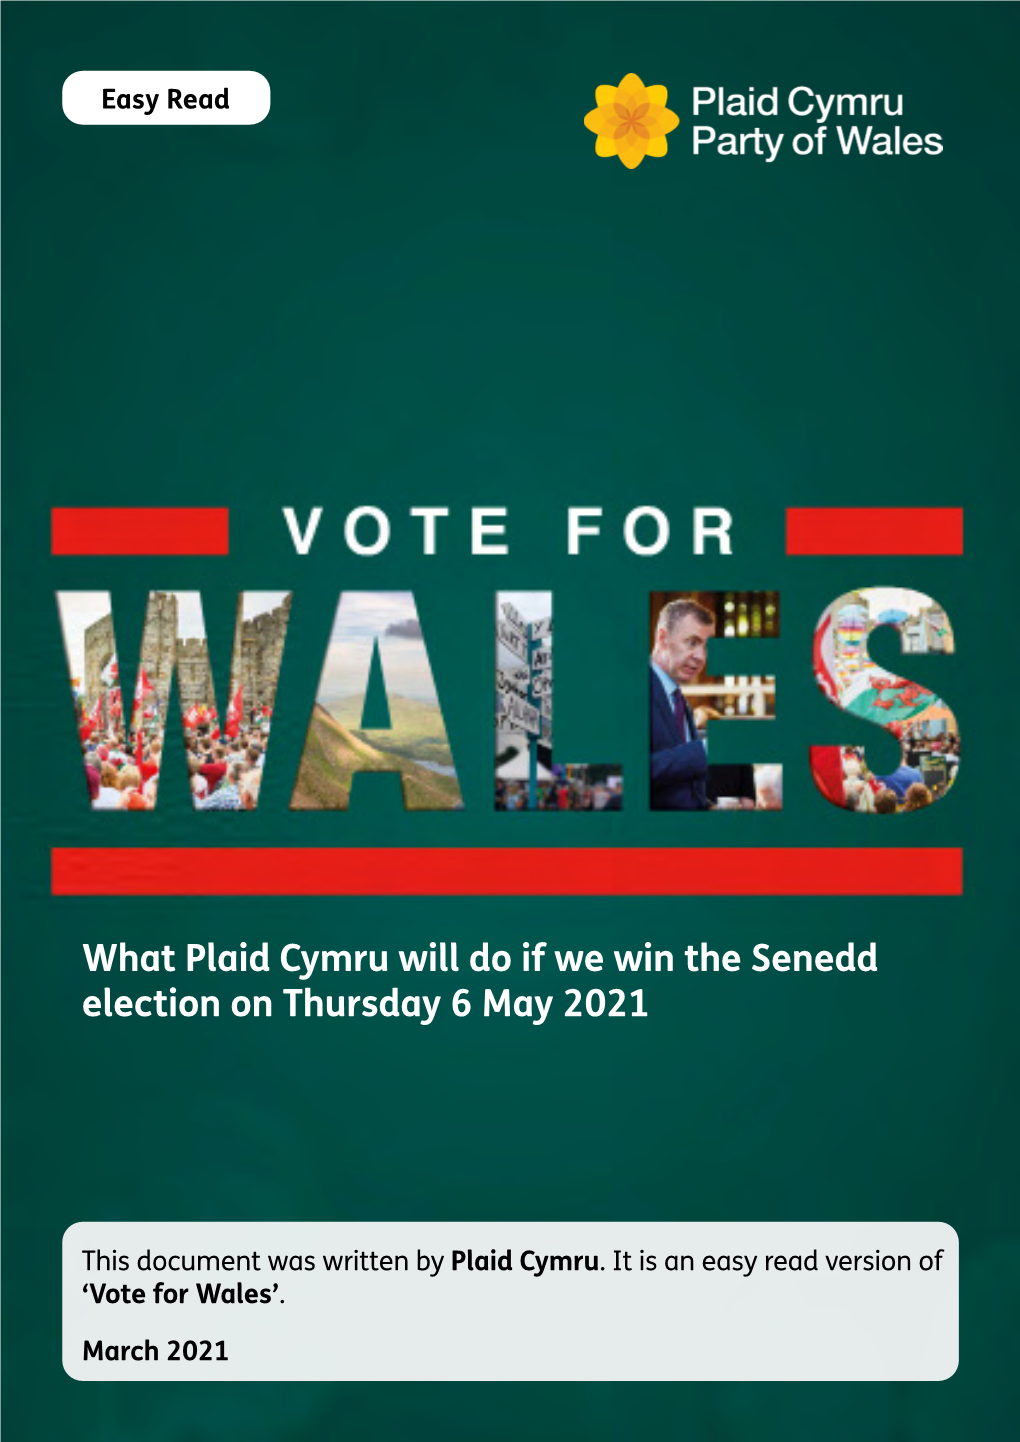 Plaid Cymru Will Do If We Win the Senedd Election on Thursday 6 May 2021